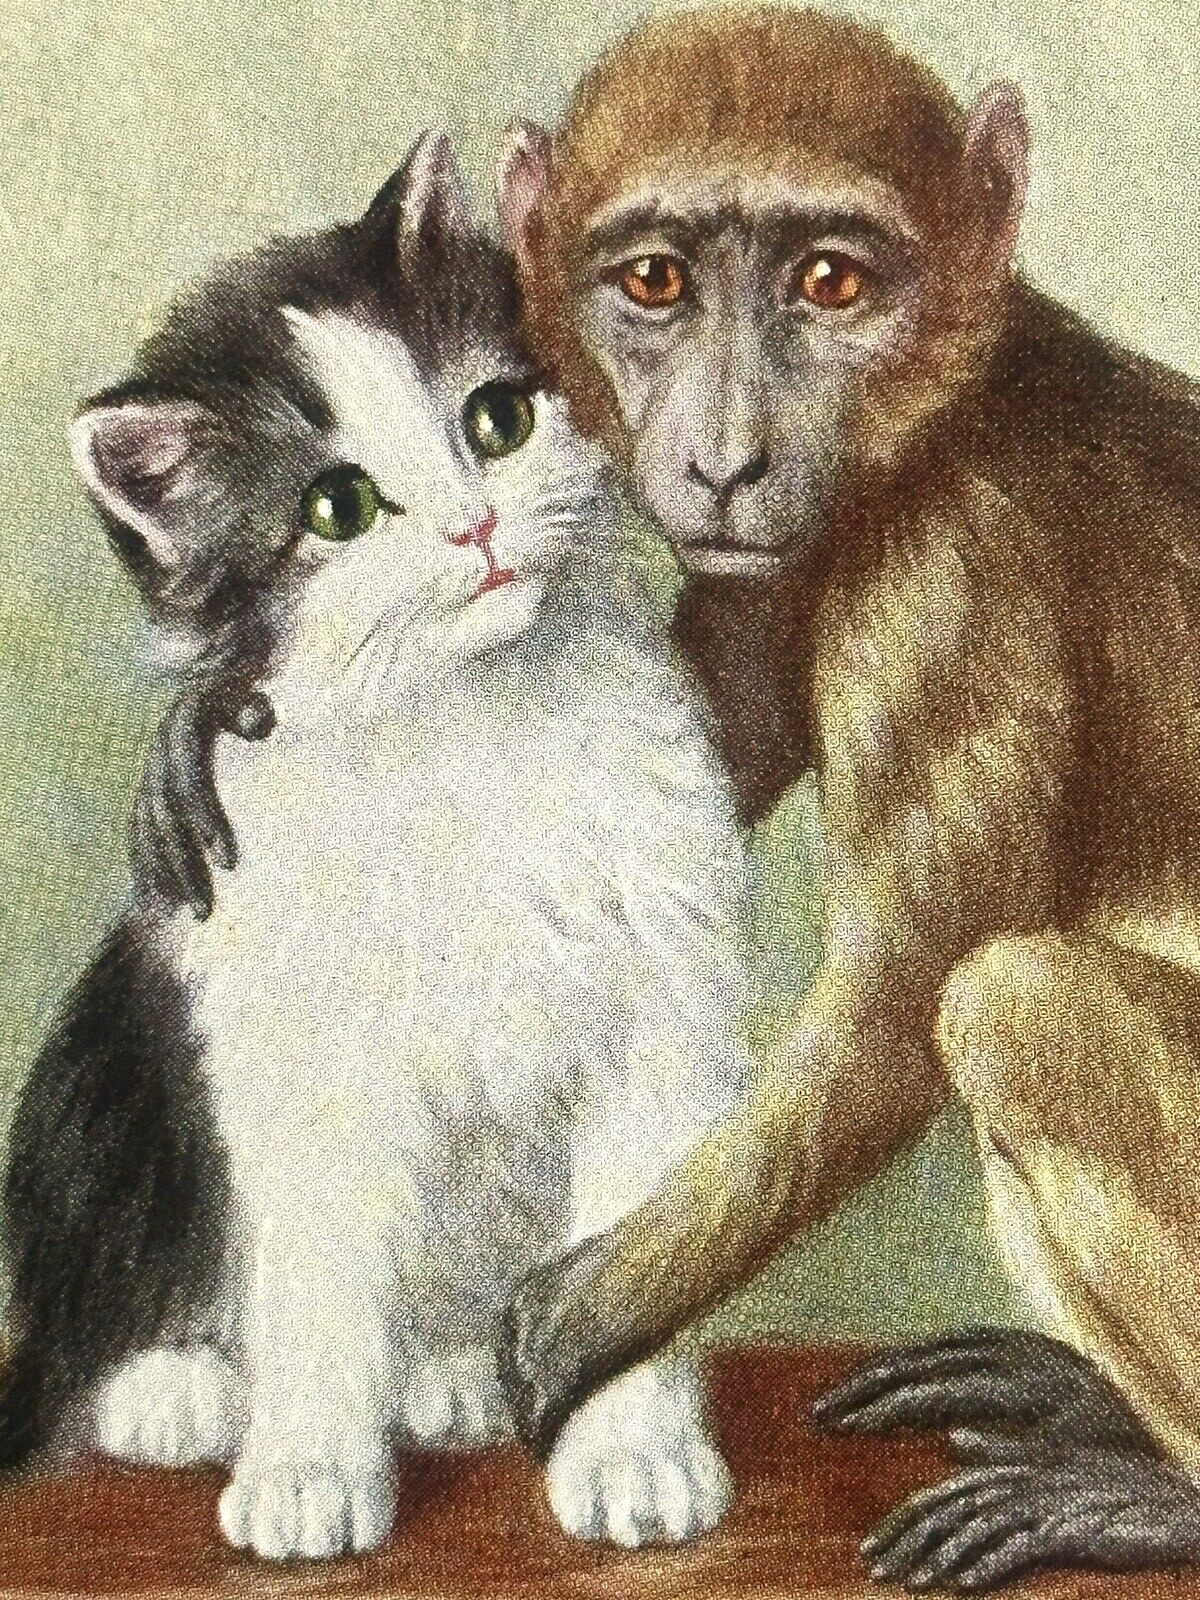 Cat Postcard Monkey Hugs One Kitten White Amber Eyes Watches Tail OGZL Publ